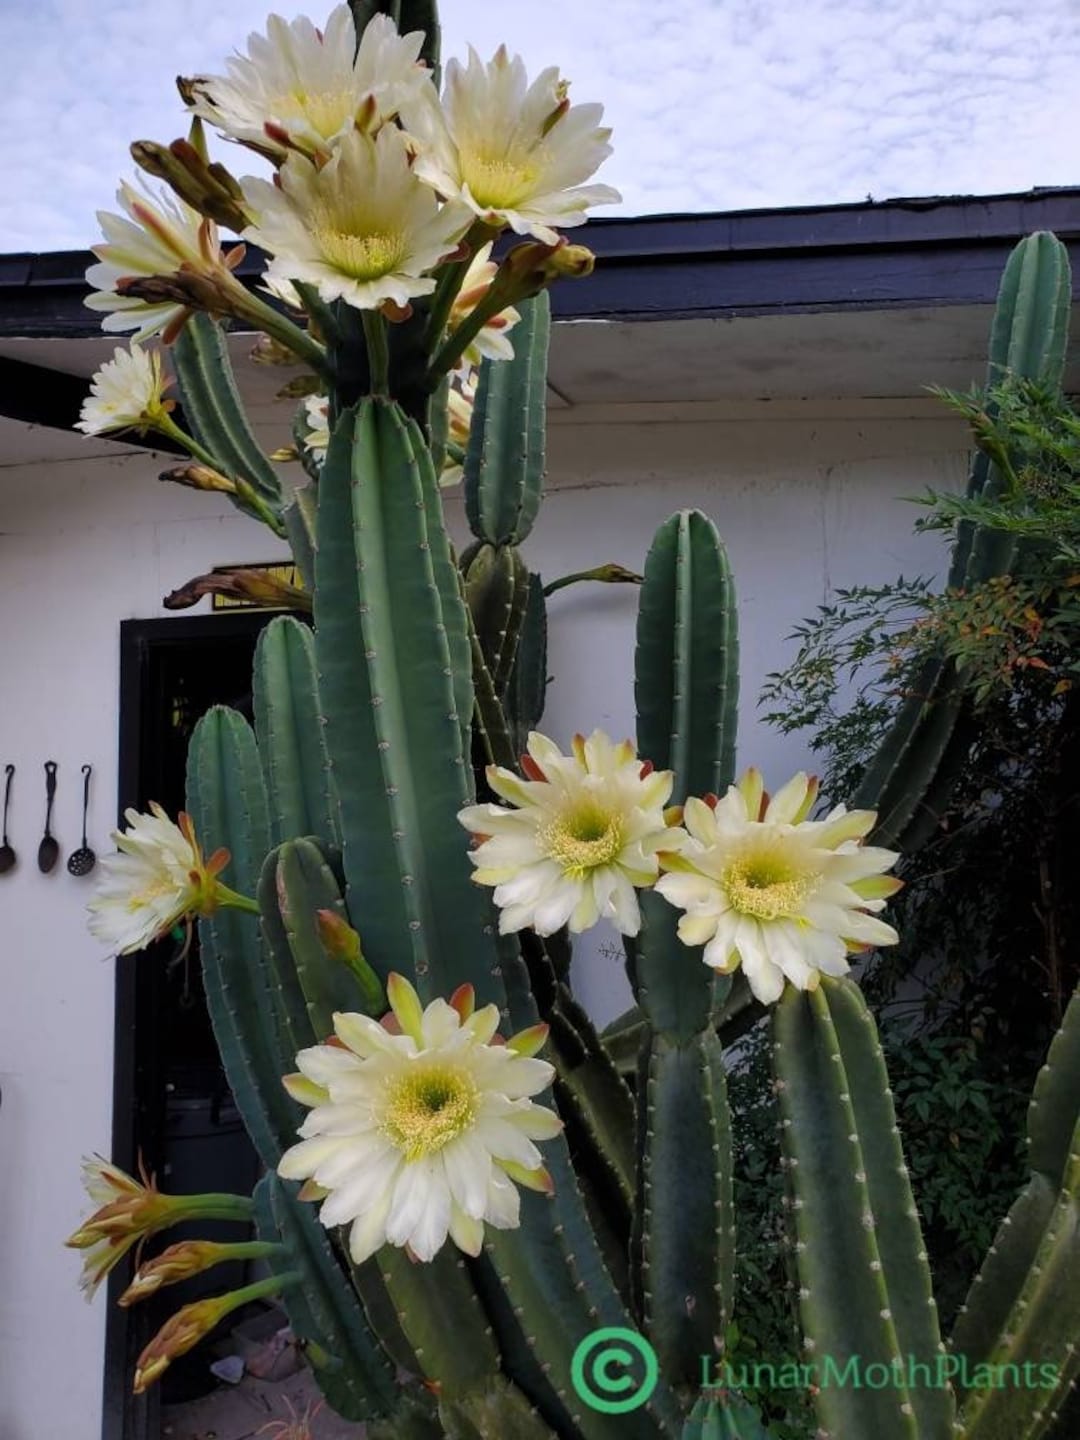 Cactus Flower 101: How to Make Cactus Bloom - Succulents Box